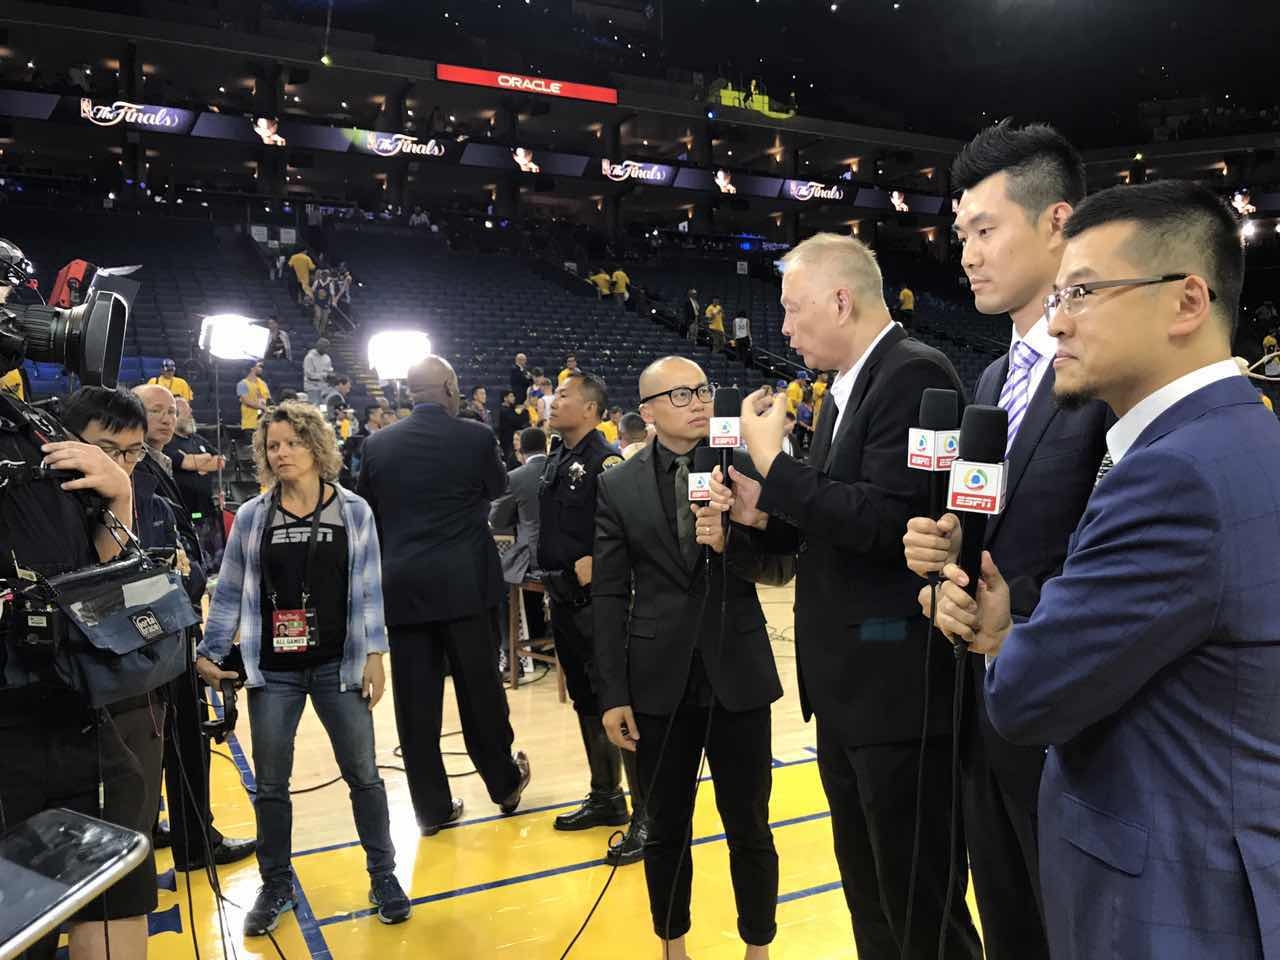 The NBA Finals: ESPN presents a global sports gathering ...